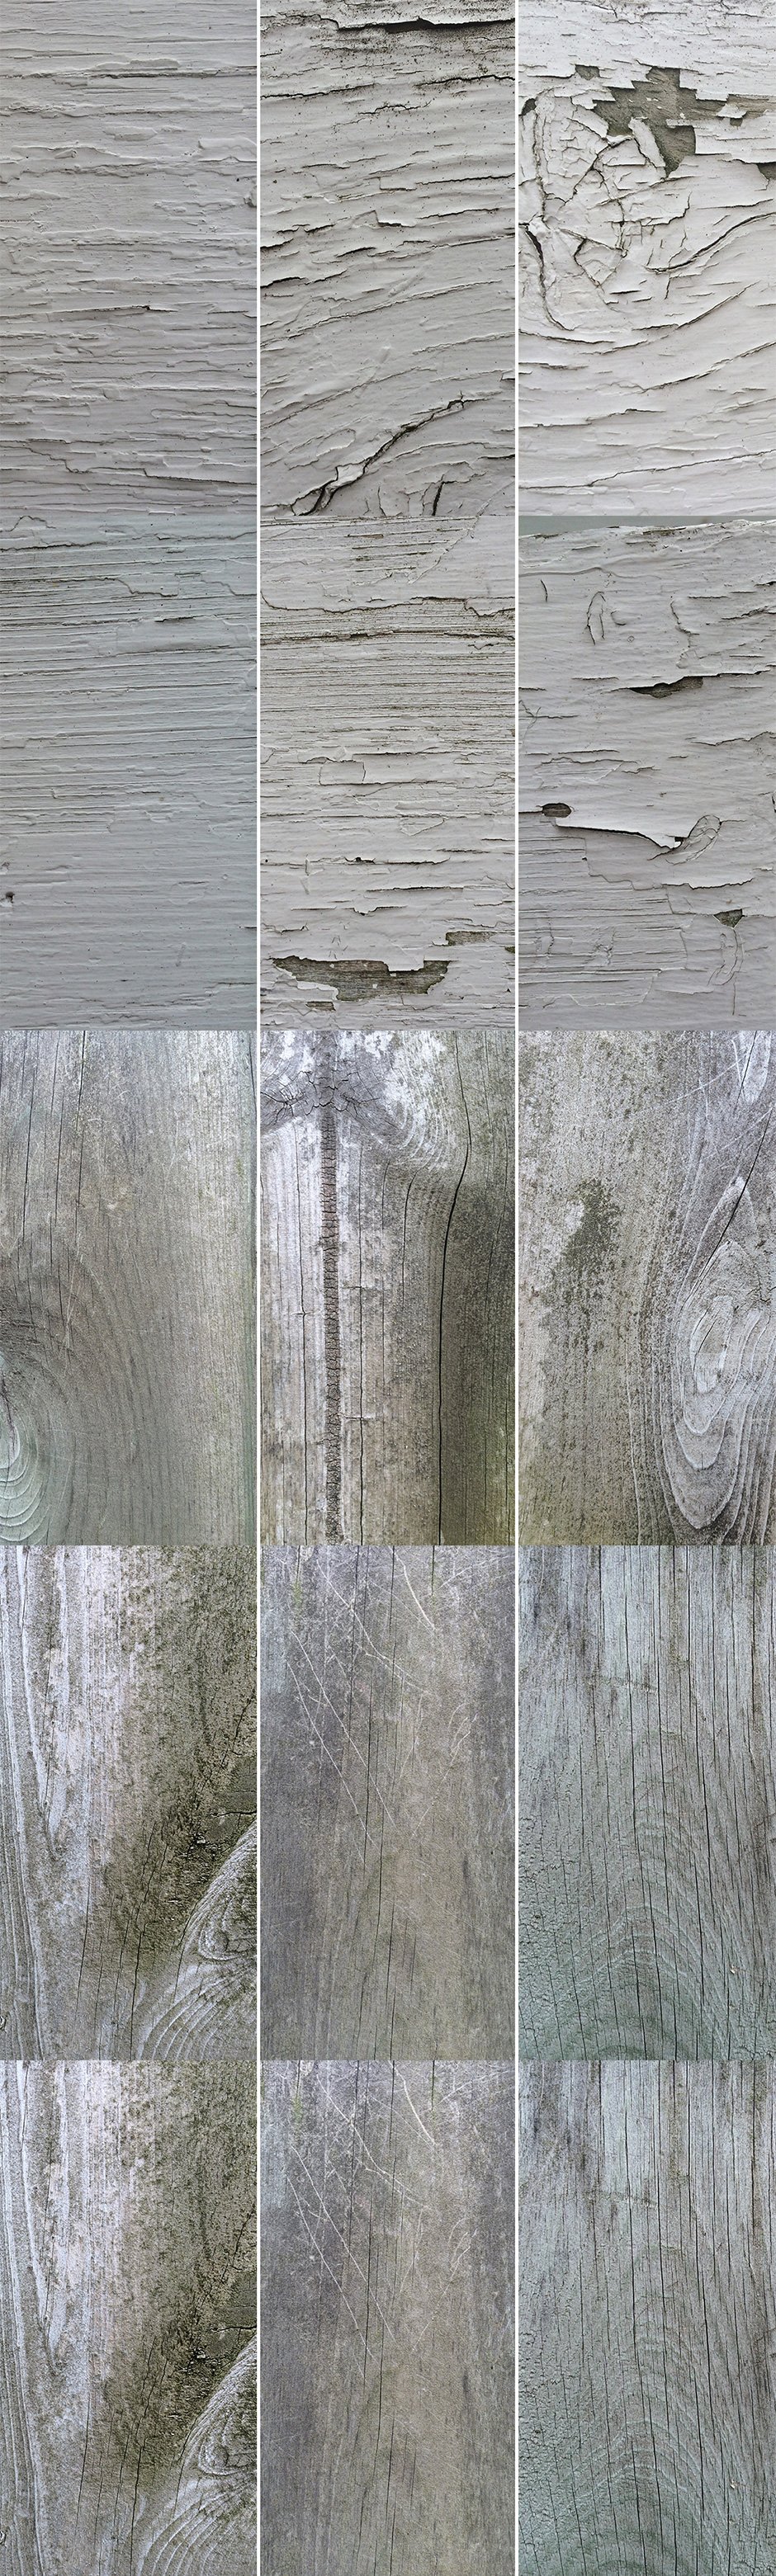 Weathered Wood Textures Volume 1